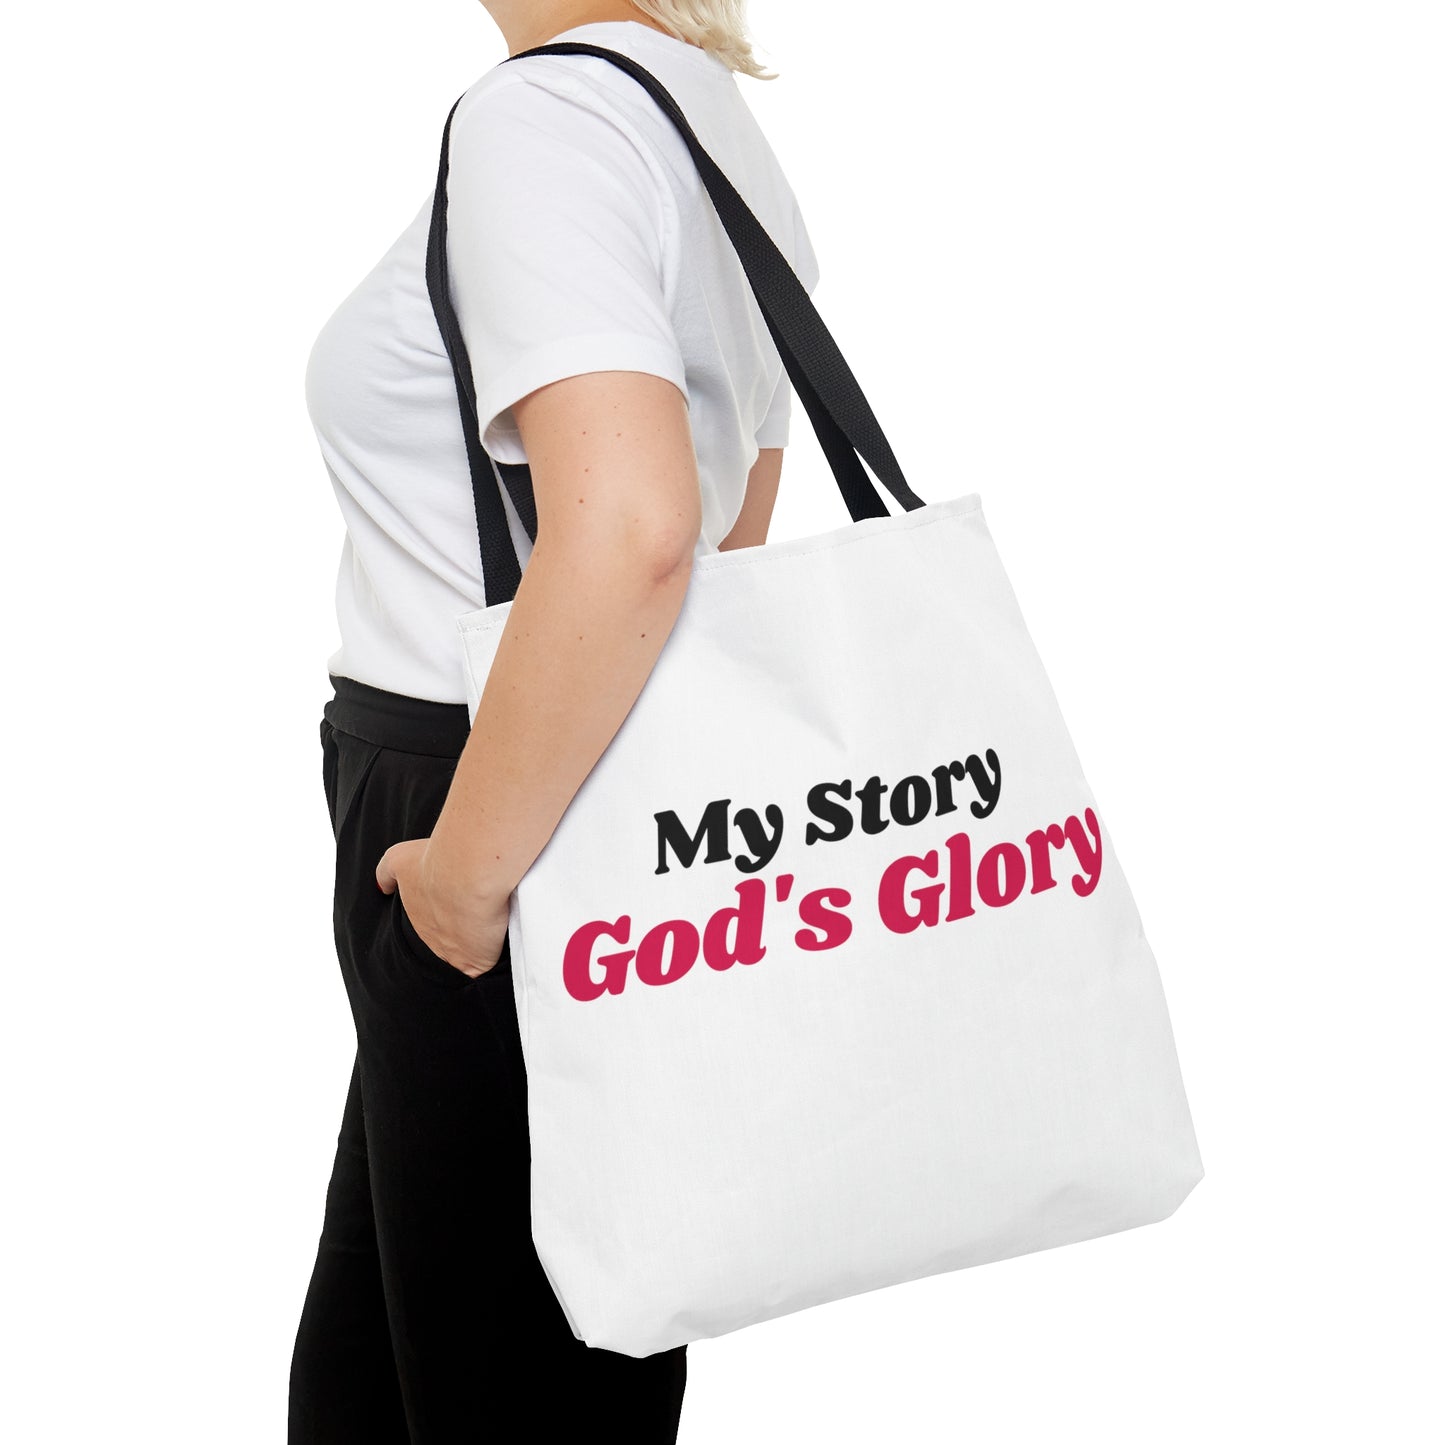 My Story God's Glory Tote Bag